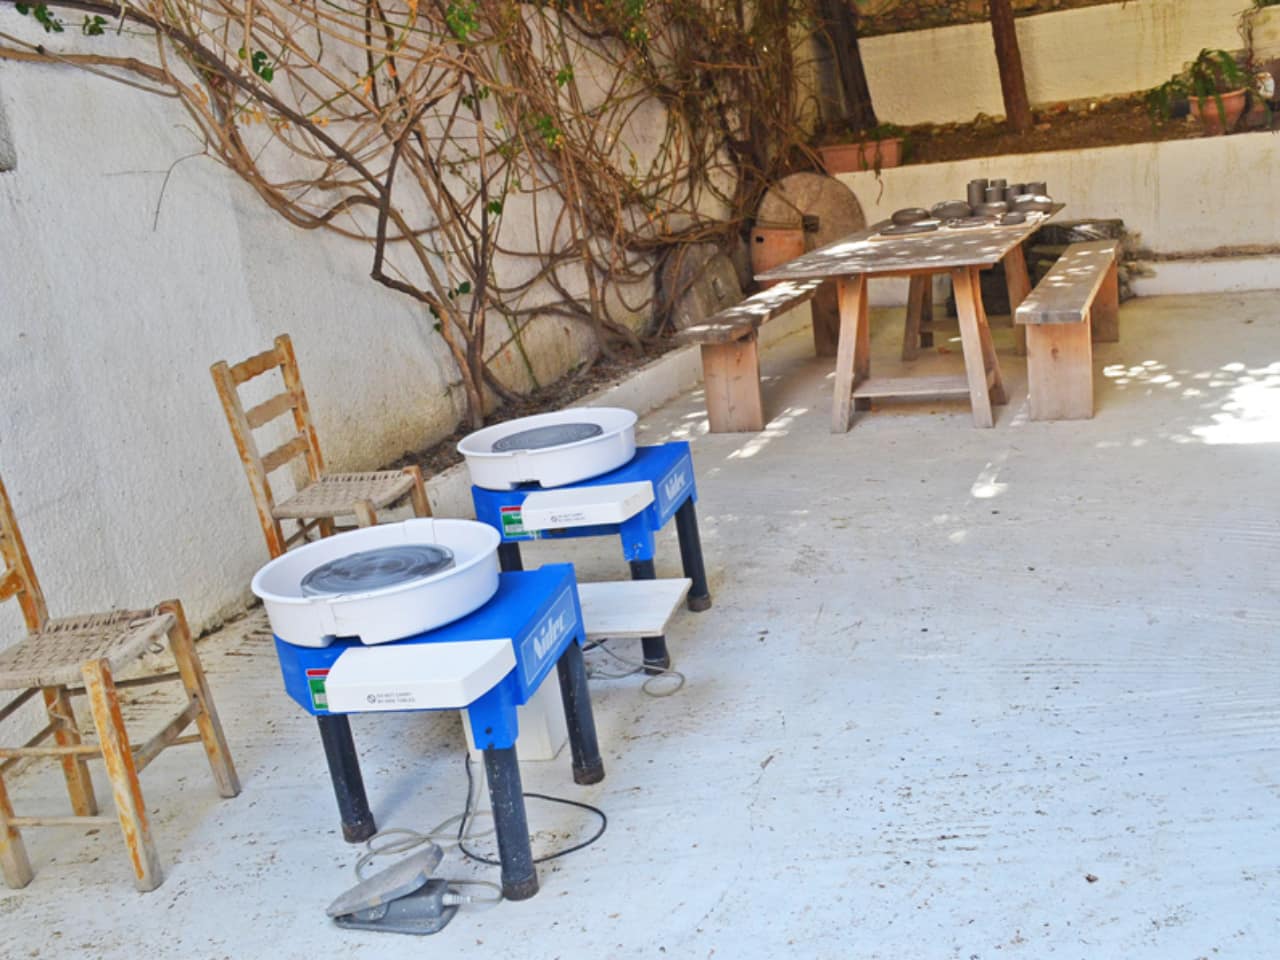 Five-day Ceramic Workshop Margarites Village Crete, best ceramic workshop rethymno crete, ceramic workshop rethimno crete, activities rethimno crete, art creativity workshop crete, things to do crete, best ceramic studio rethimno crete, ea ceramic workshops 